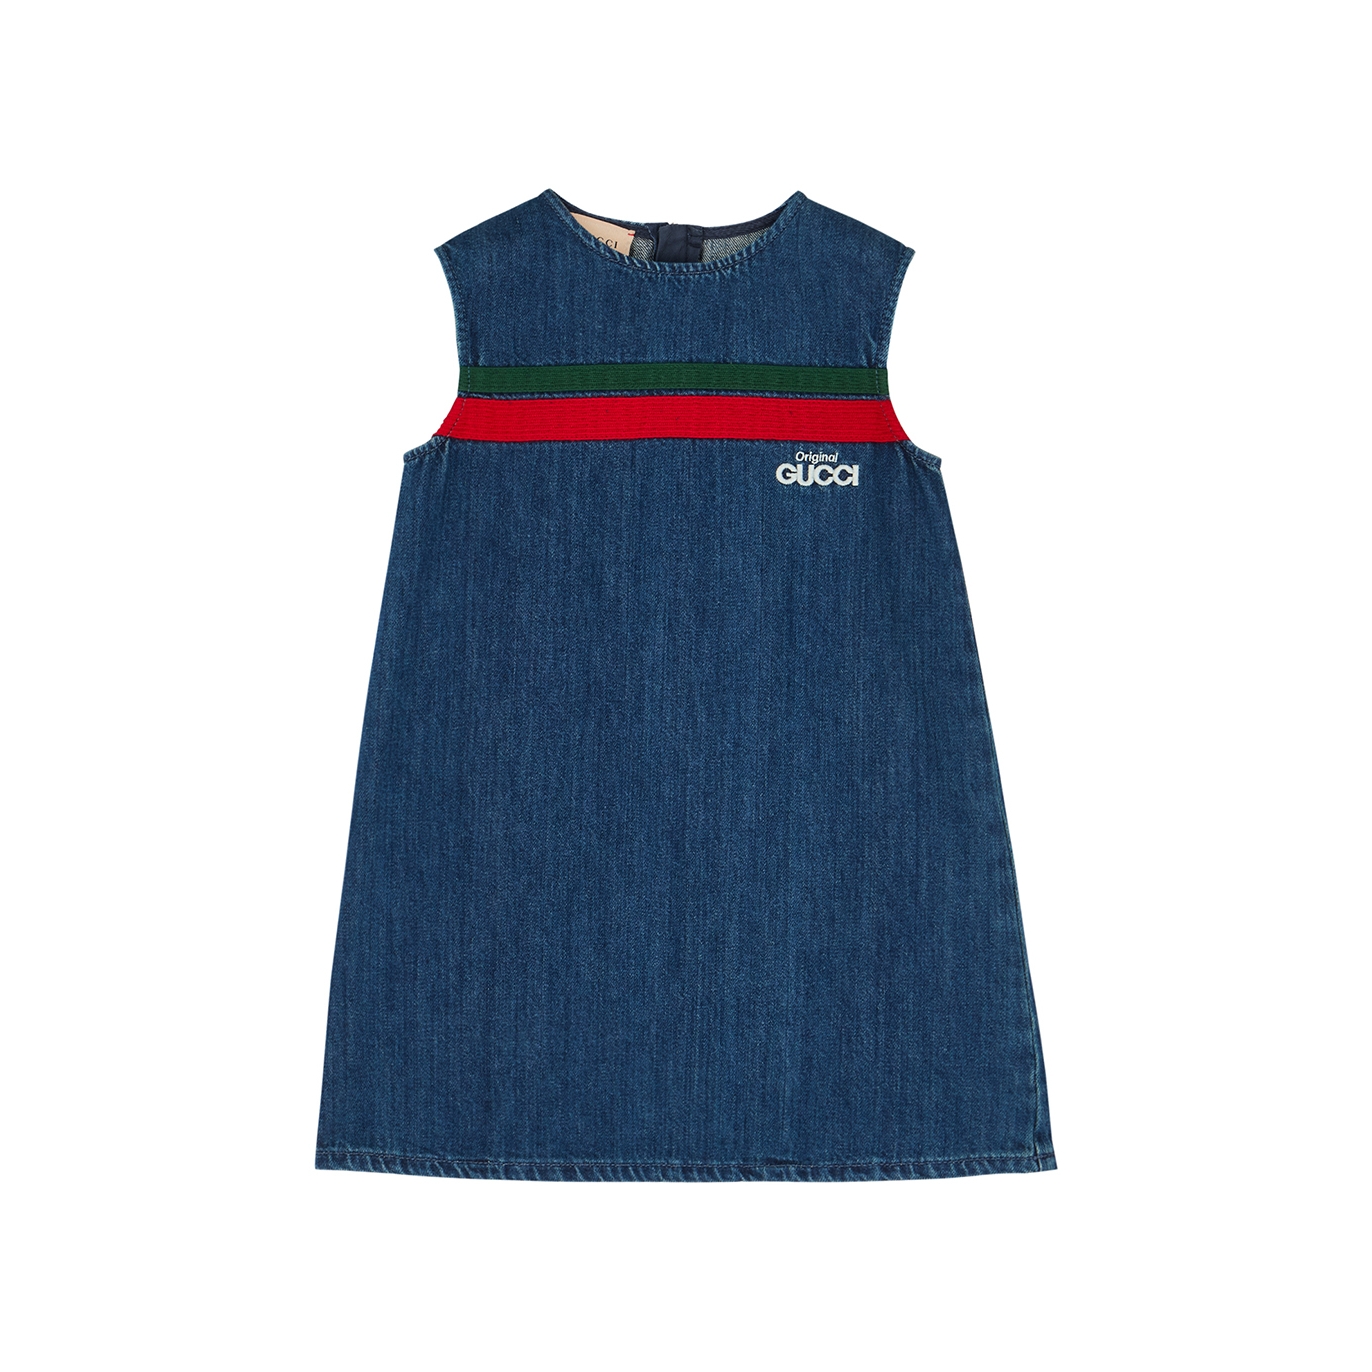 Gucci Kids Blue Denim Dress - 8 Years